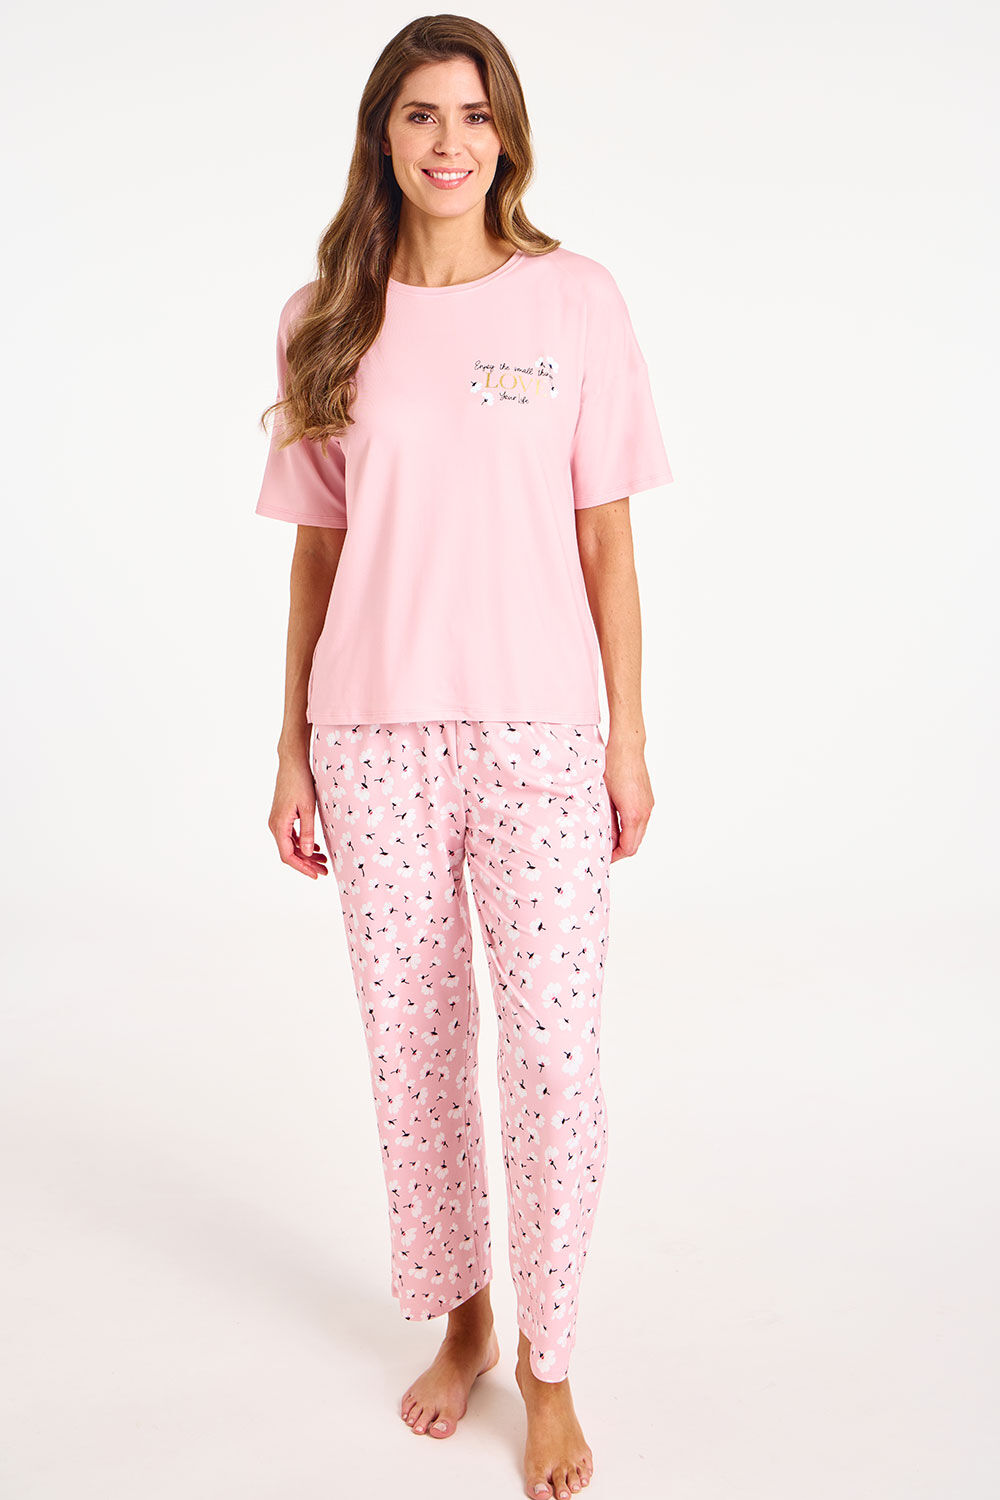 Bonmarche Short Sleeve Pink Floral Foil Print Pyjama Set, Size: 12-14